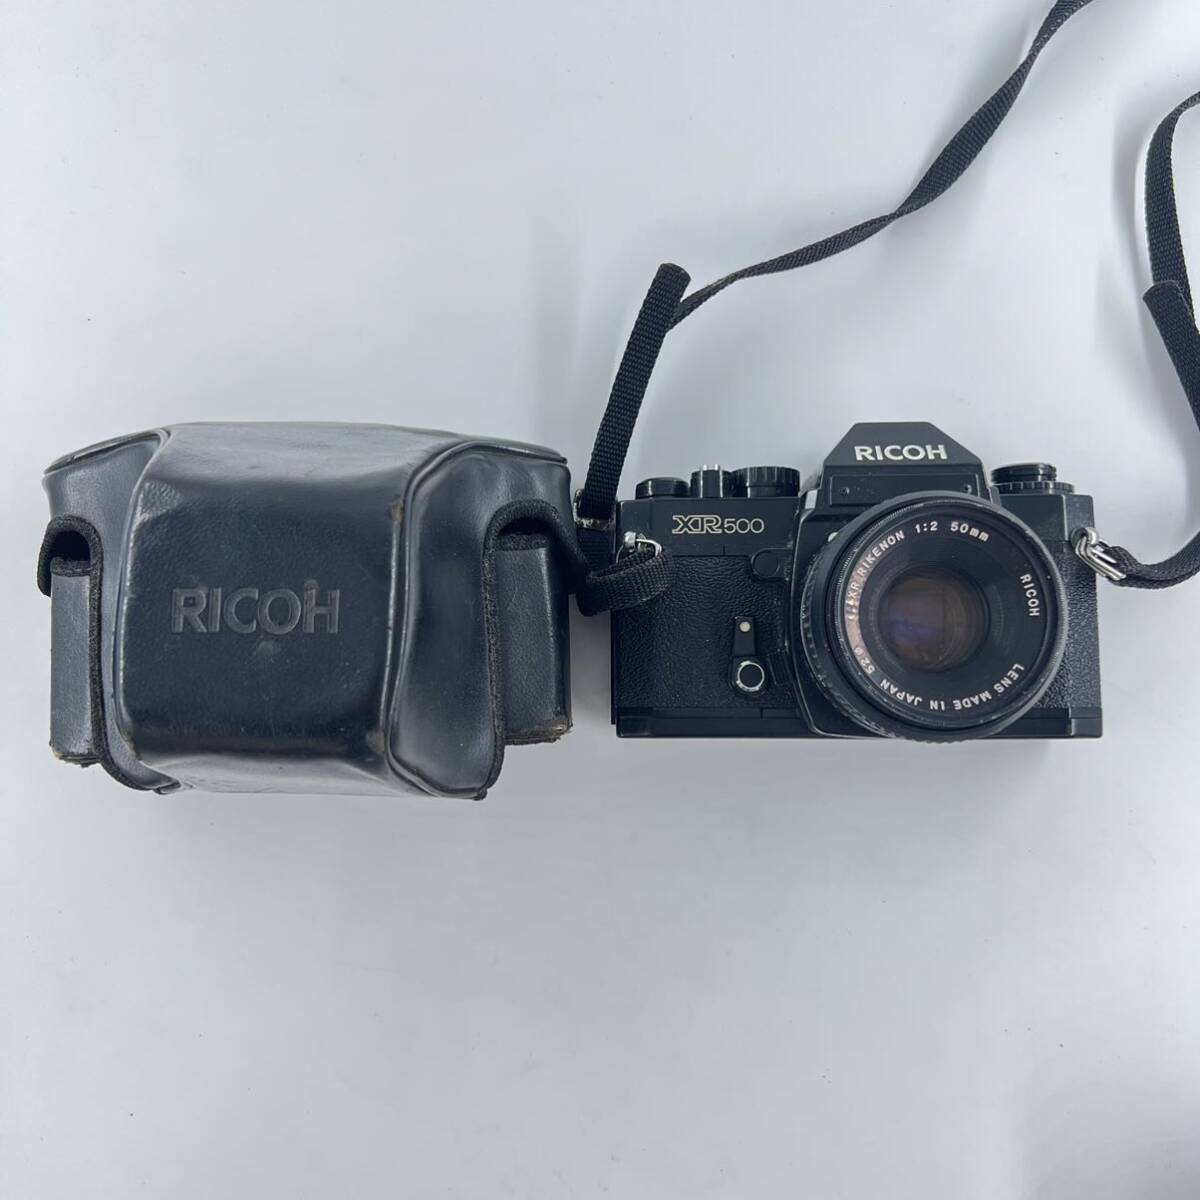 U4 RICOH リコー XR500 RIKENON 1:2 50mm MC SKYLIGHT 1B 52mm フィルムカメラ カメラ シャッター音OK の画像1